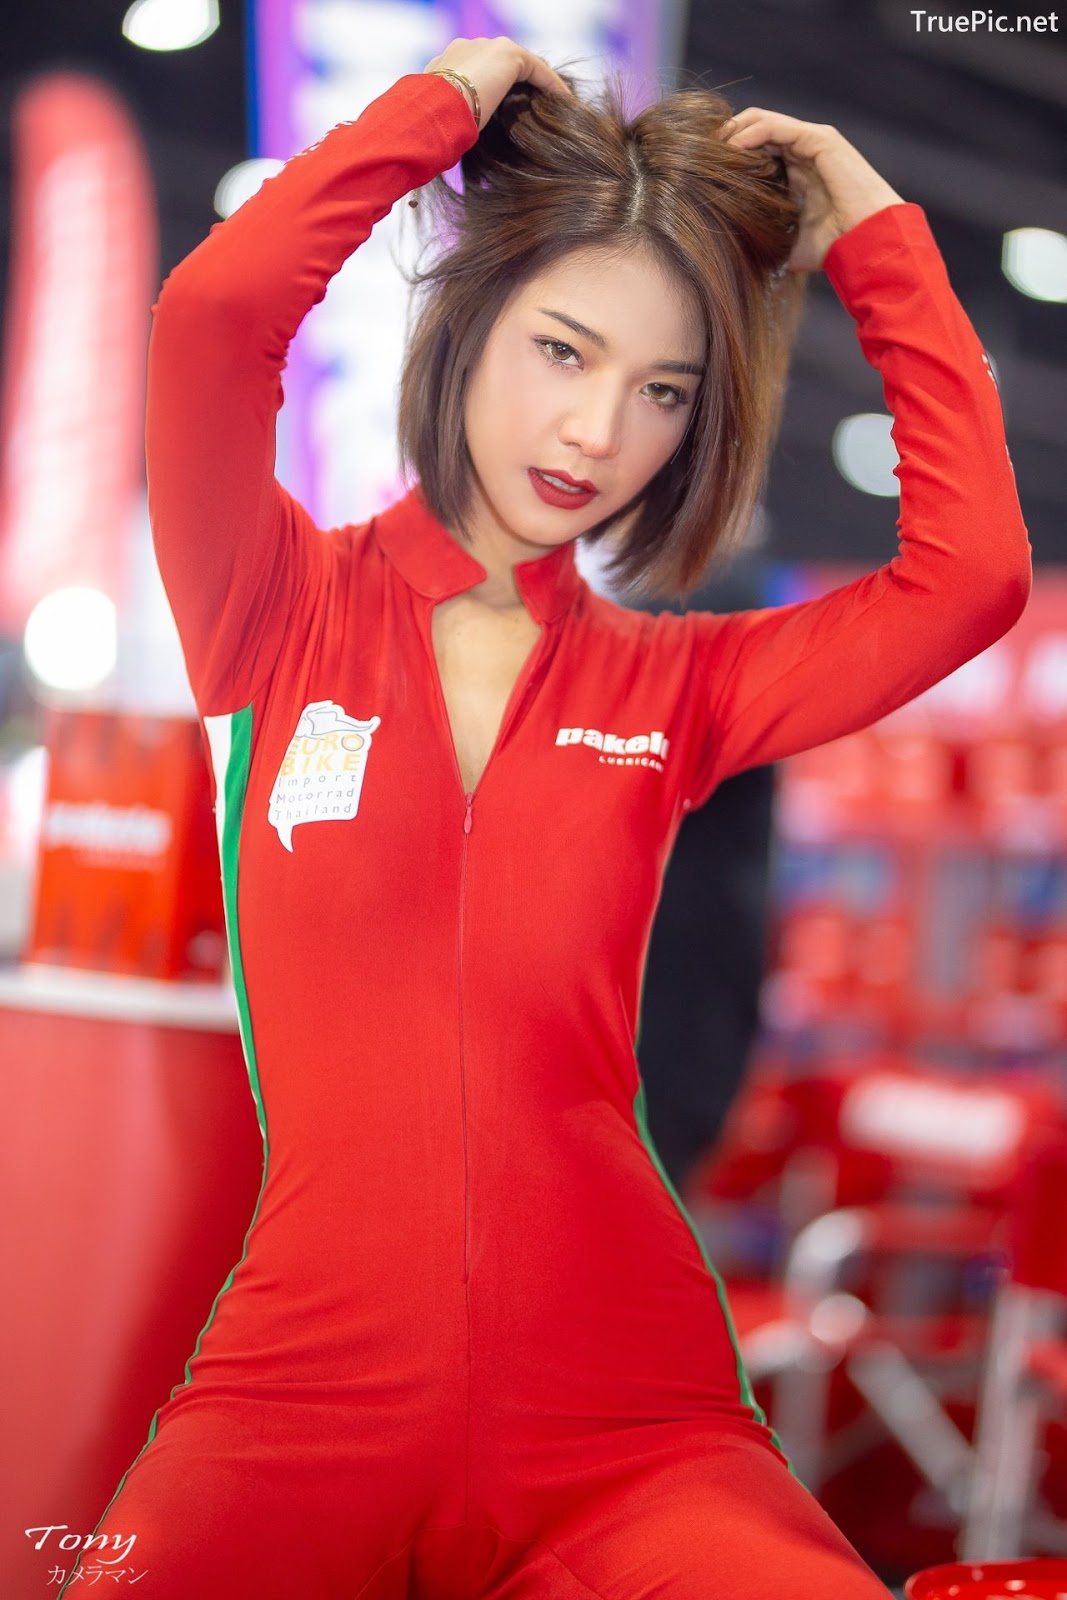 Image-Thailand-Hot-Model-Thai-Racing-Girl-At-Bangkok-Auto-Salon-2019-TruePic.net- Picture-9